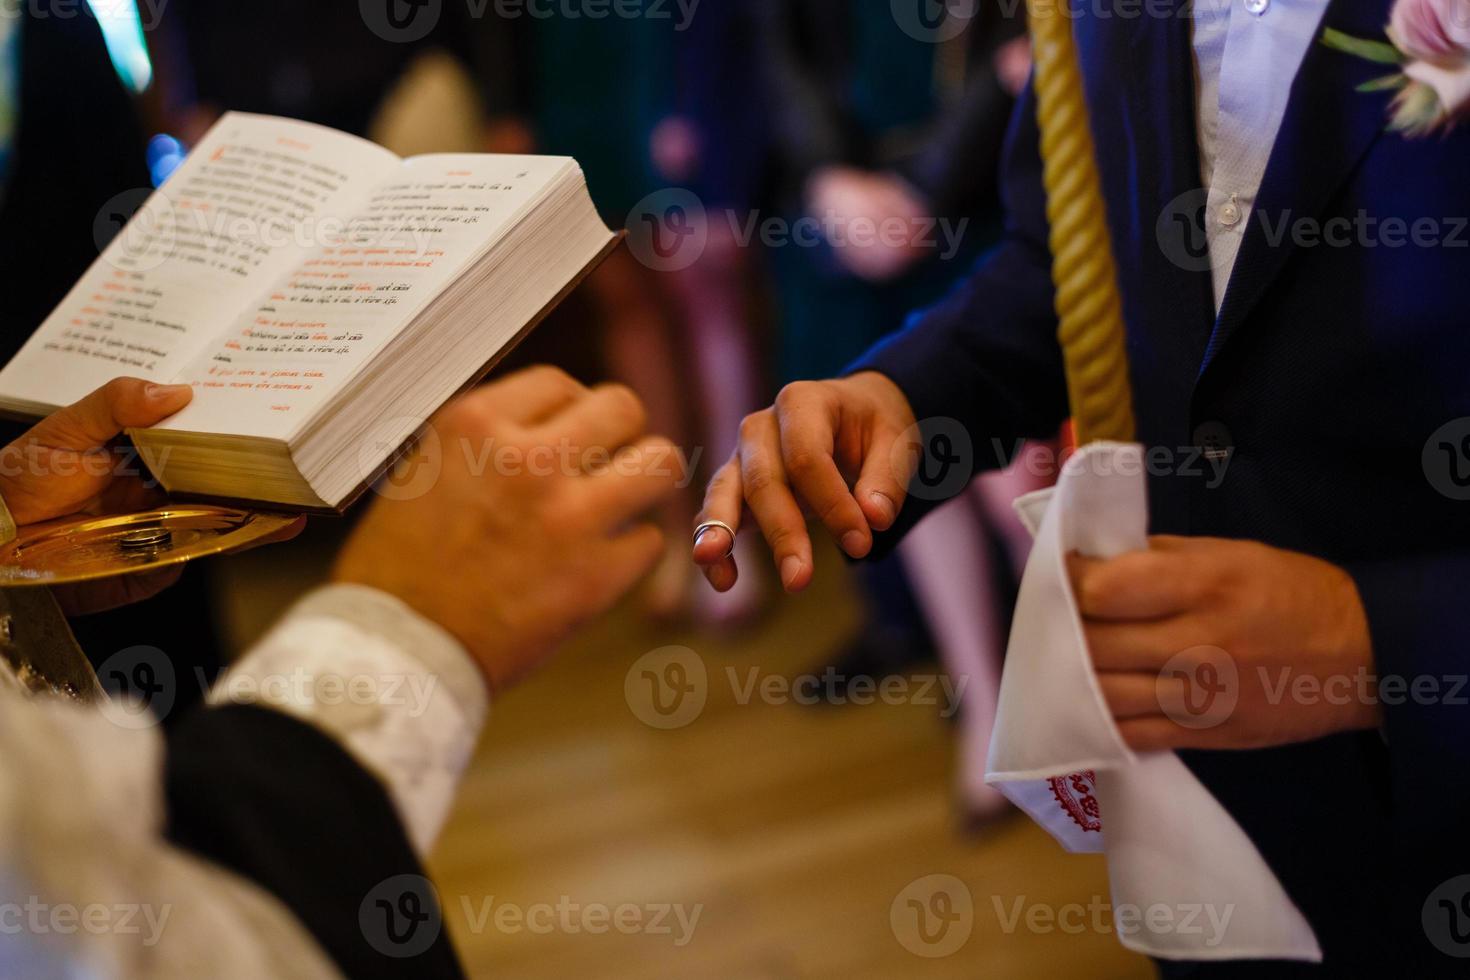 Groom slipping ring on finger of bride at wedding photo